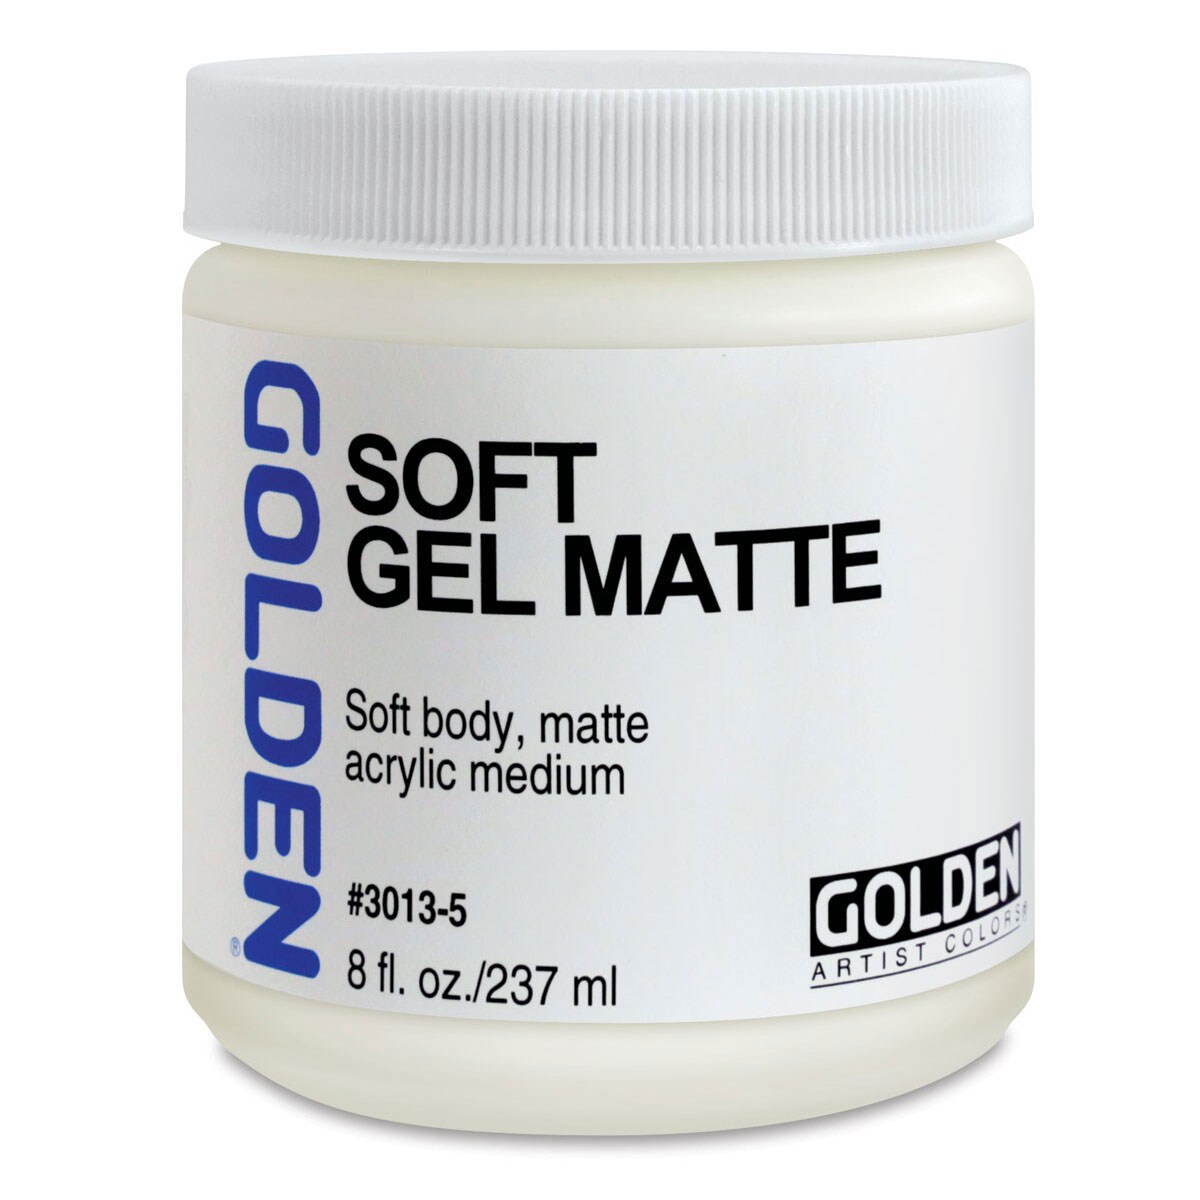 Golden Soft Acrylic Gel Medium - Matte, 8 oz jar